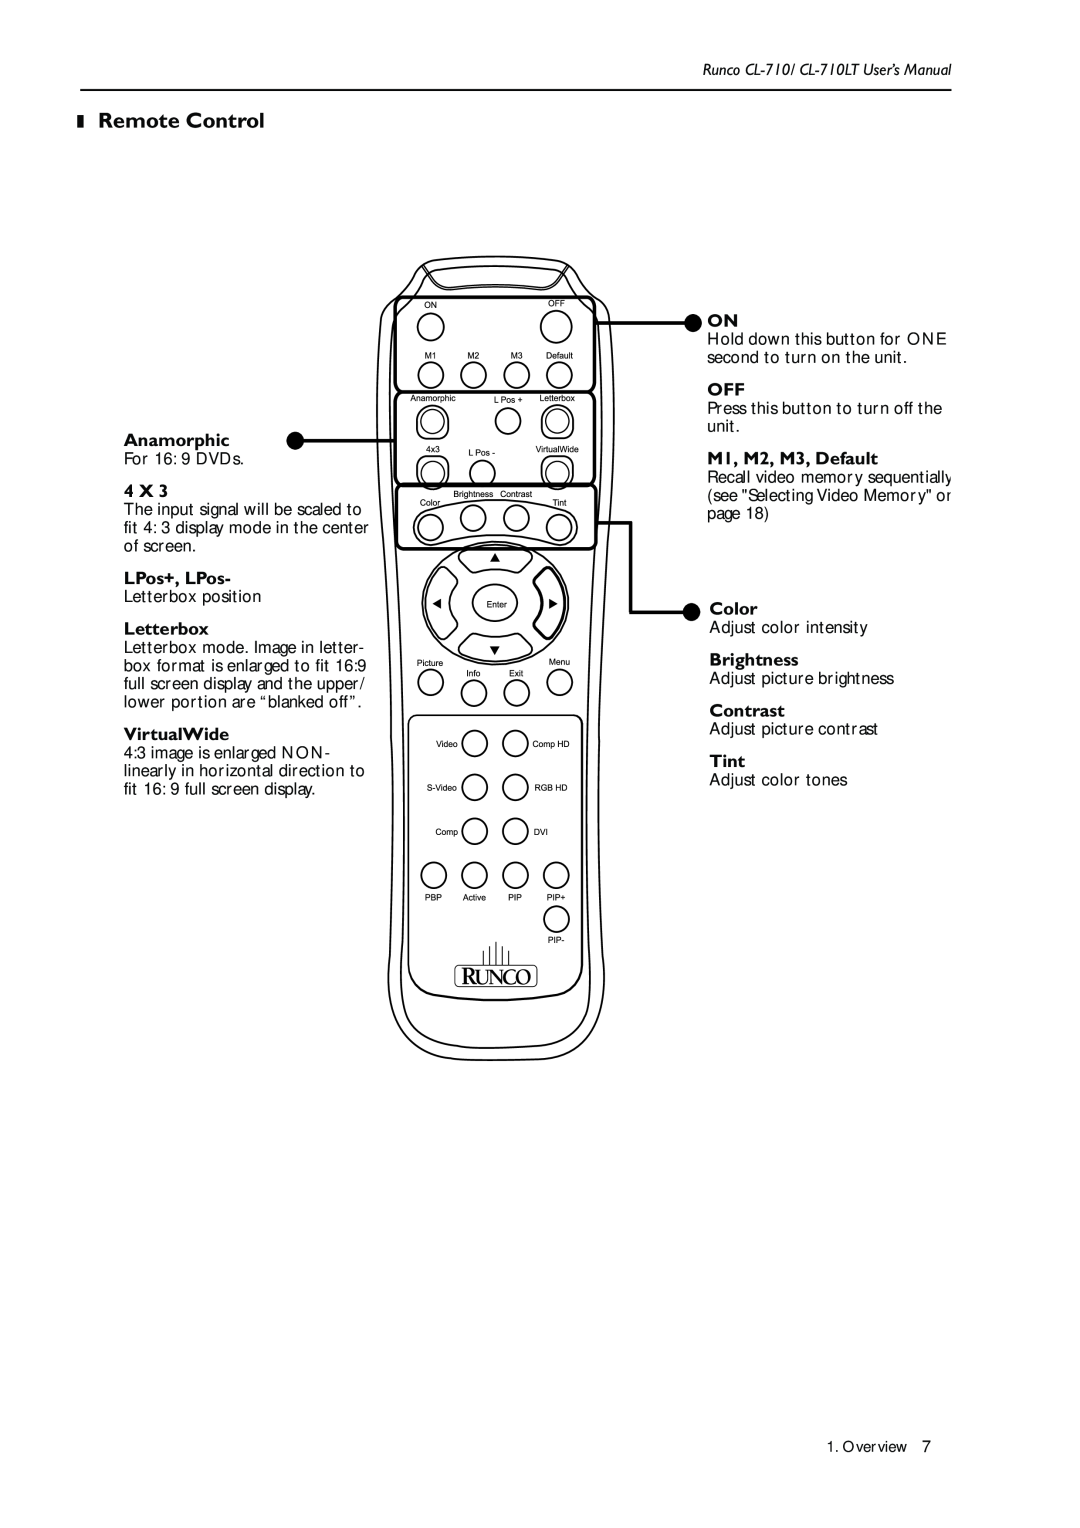 Runco CL-710LT, Reflection manual Remote Control 